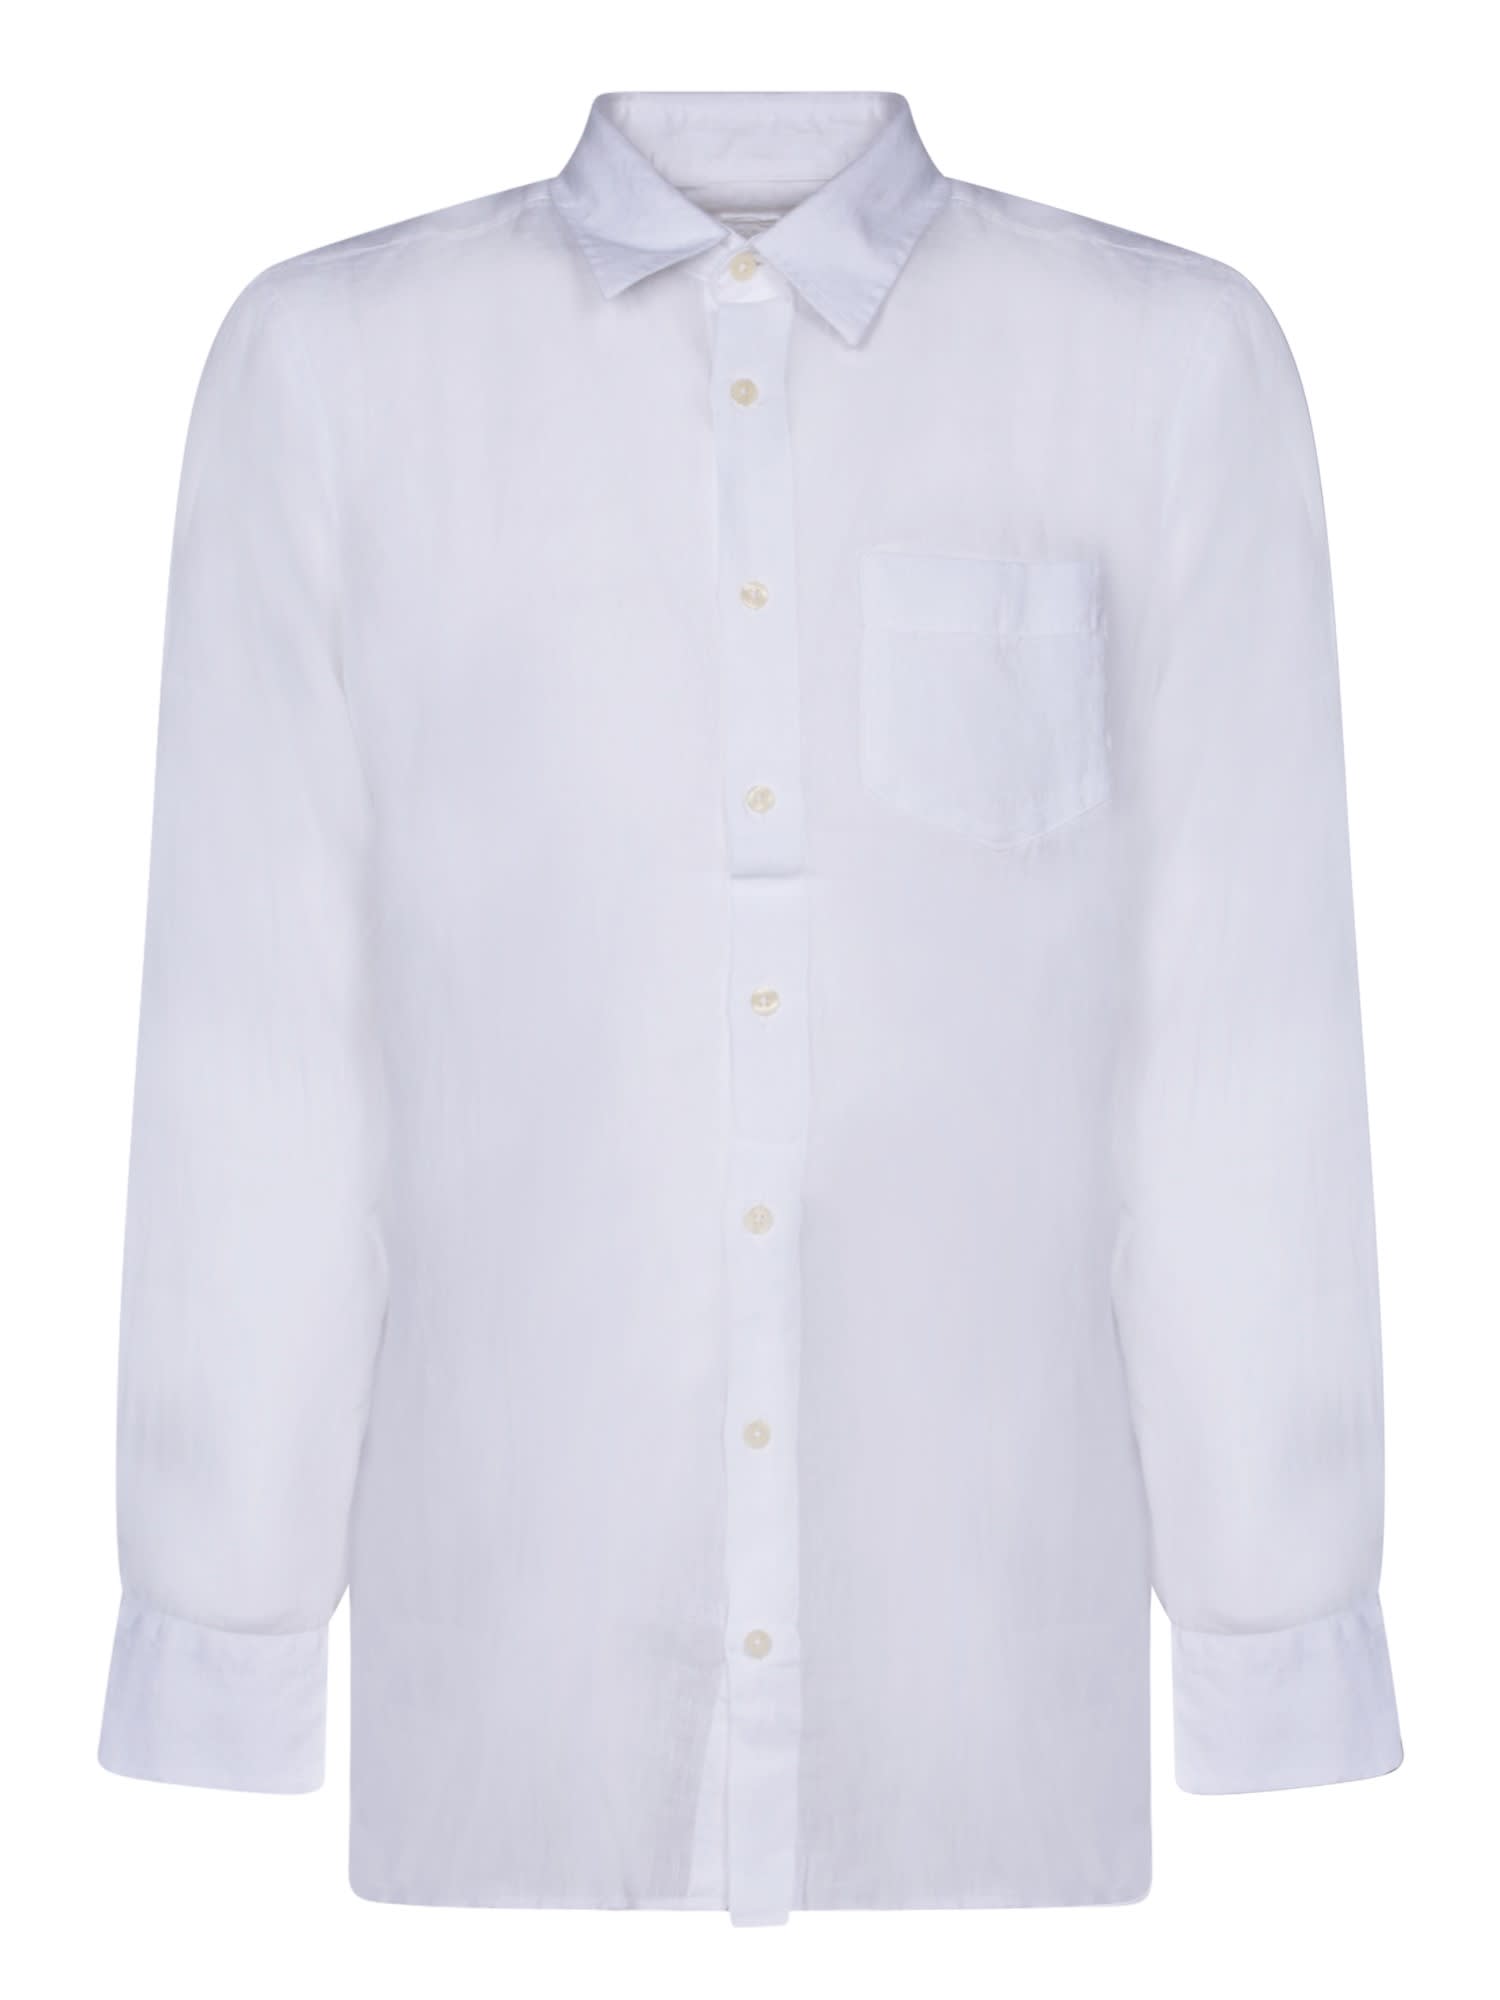 White Linen Pocket Shirt